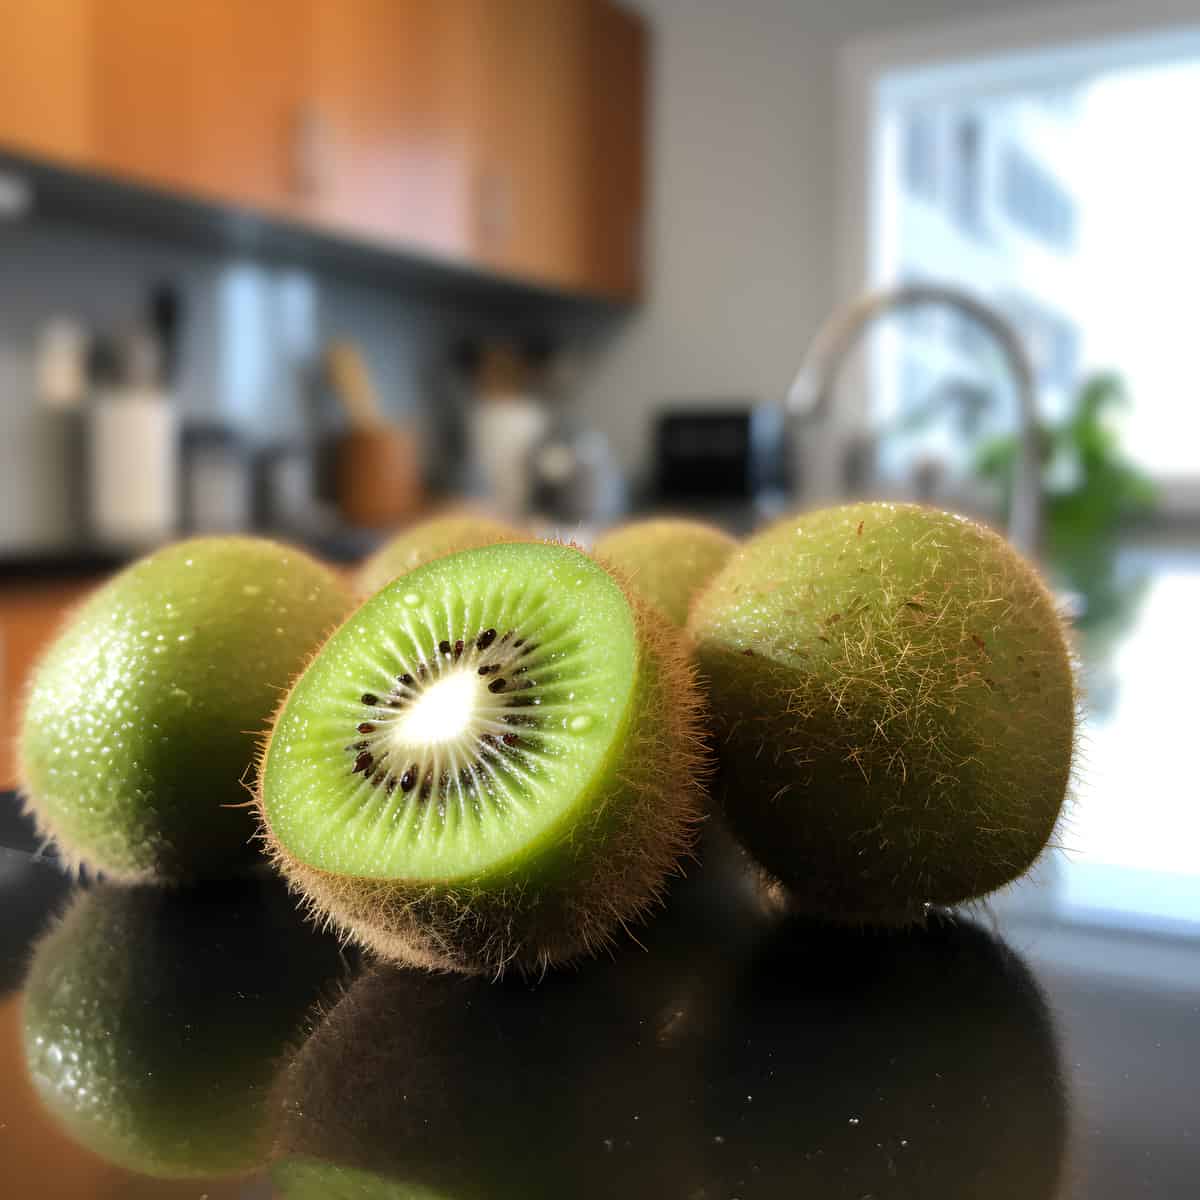 Kiwifriut on a kitchen counter